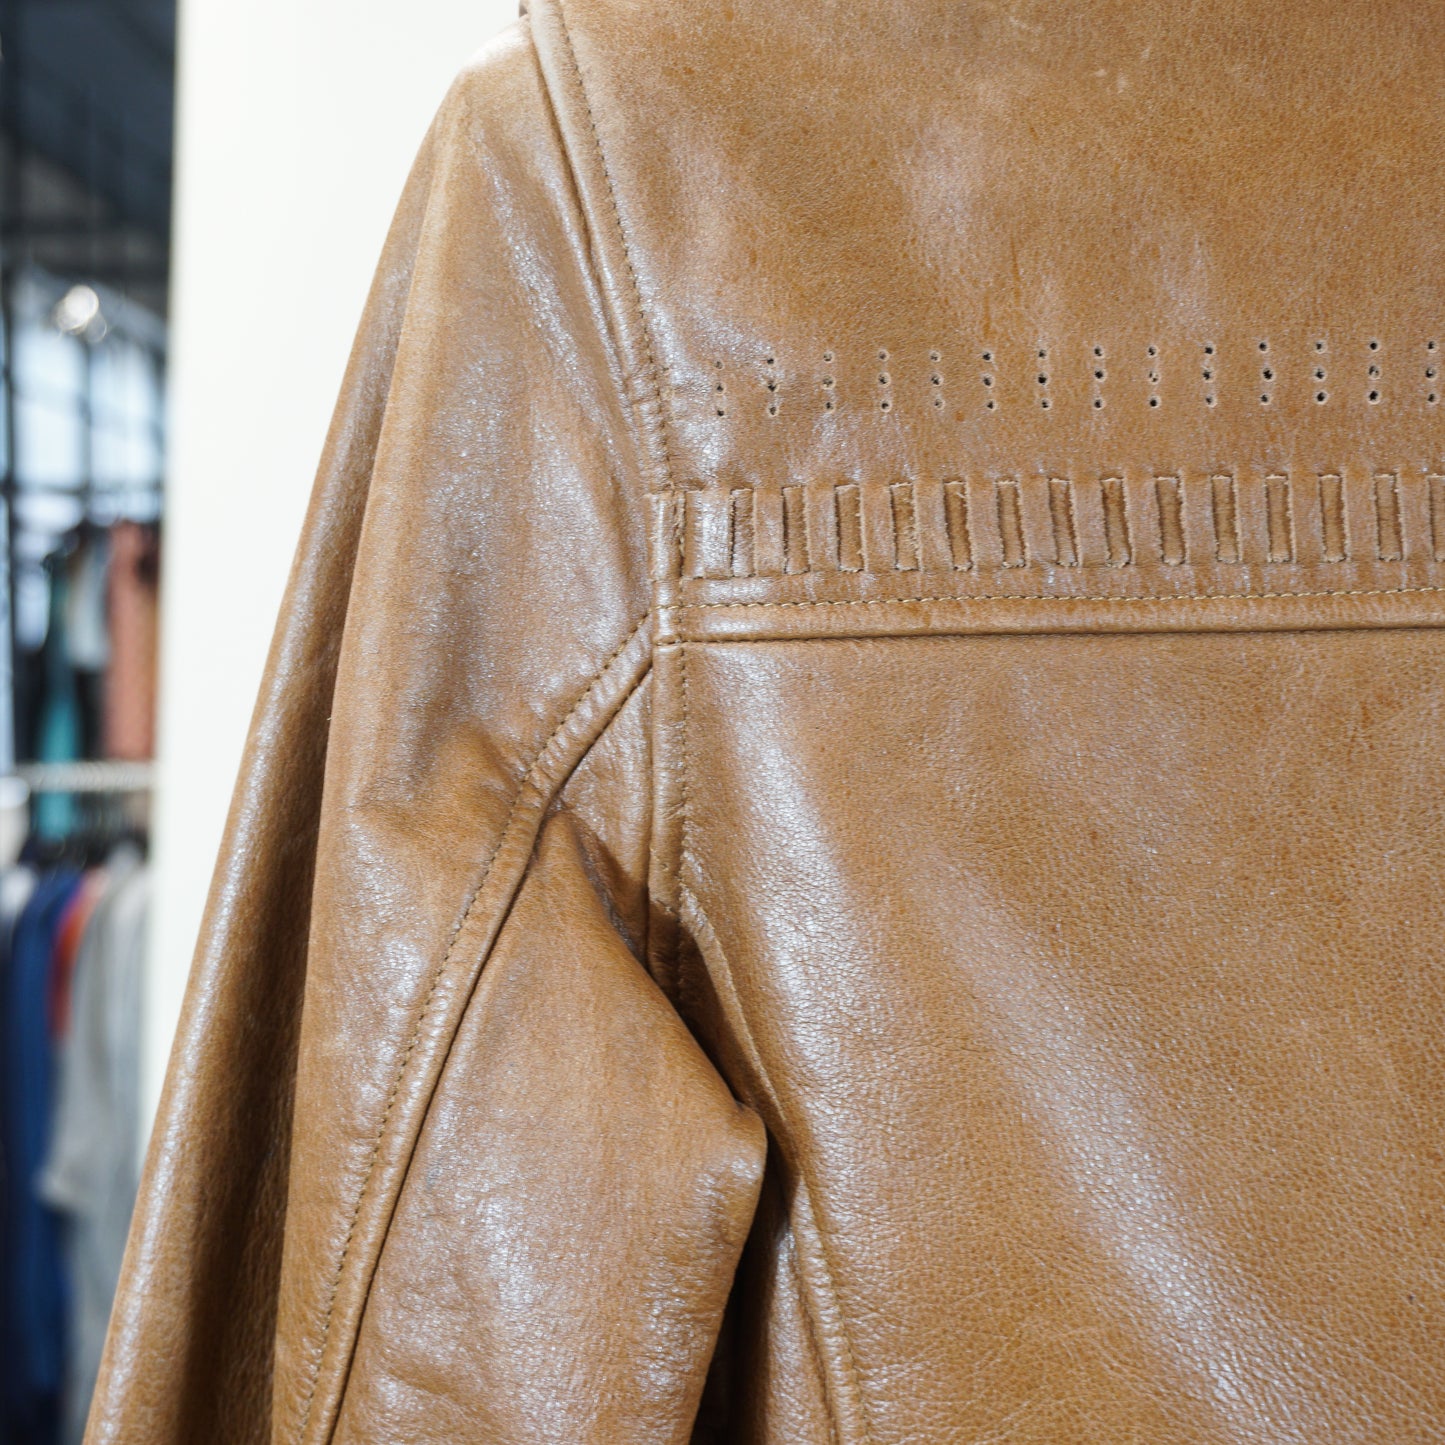 Y2K 'Jays New York' Genuine Leather Moto Jacket (Women's M)